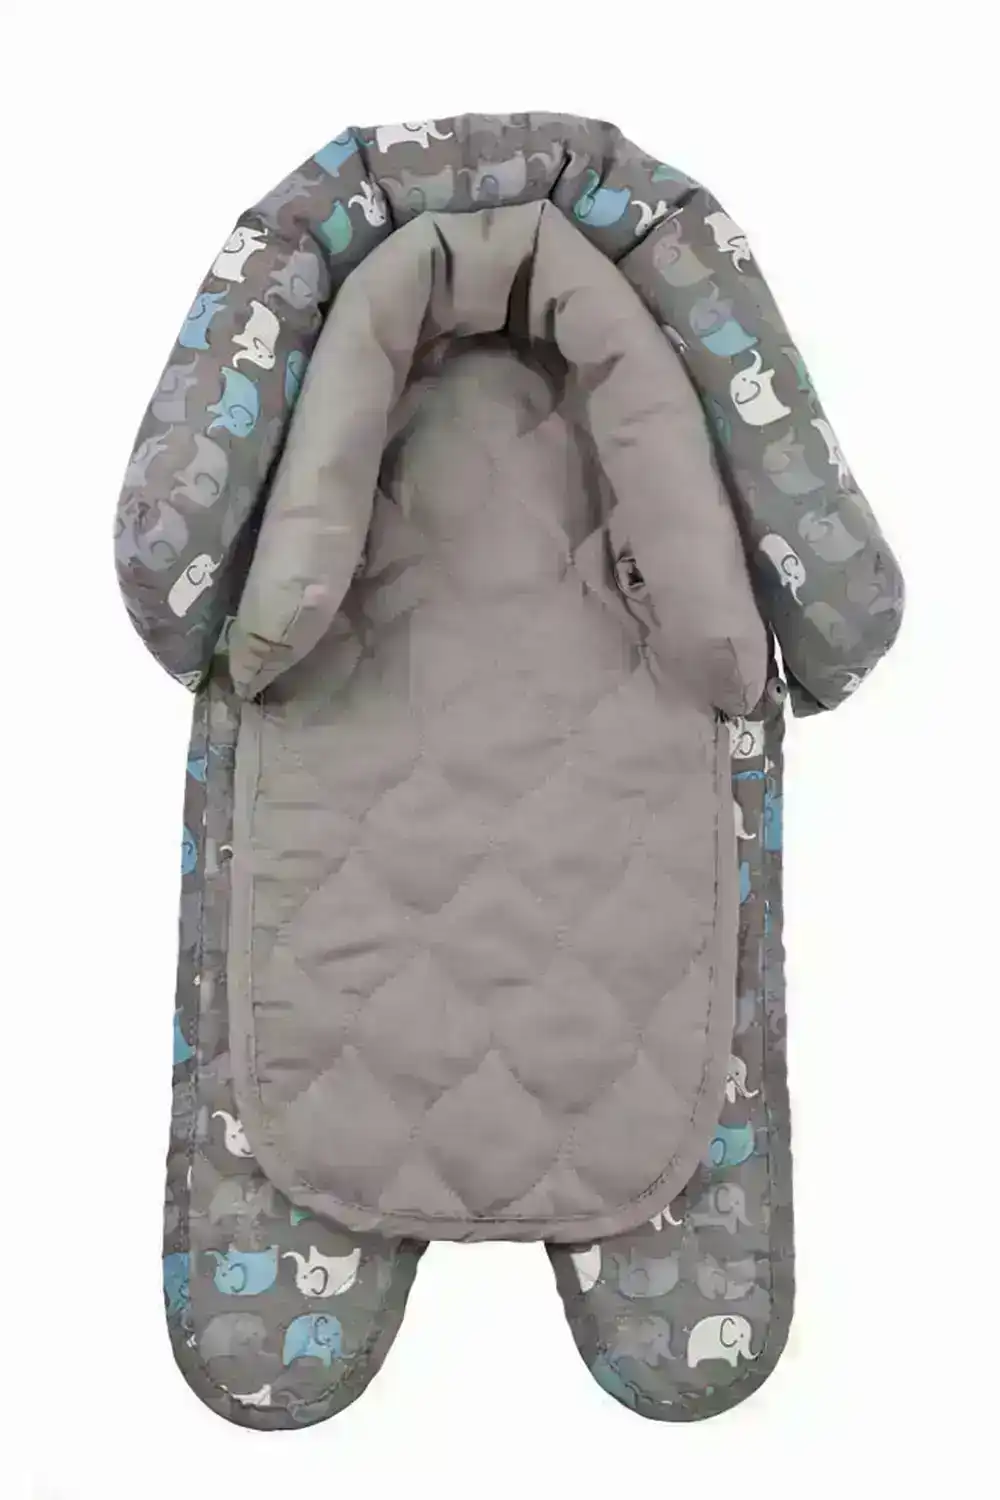 Playette 2-in-1 Comfort Travel Head Support w/ Strap Elephant Baby/Newborn 0m+